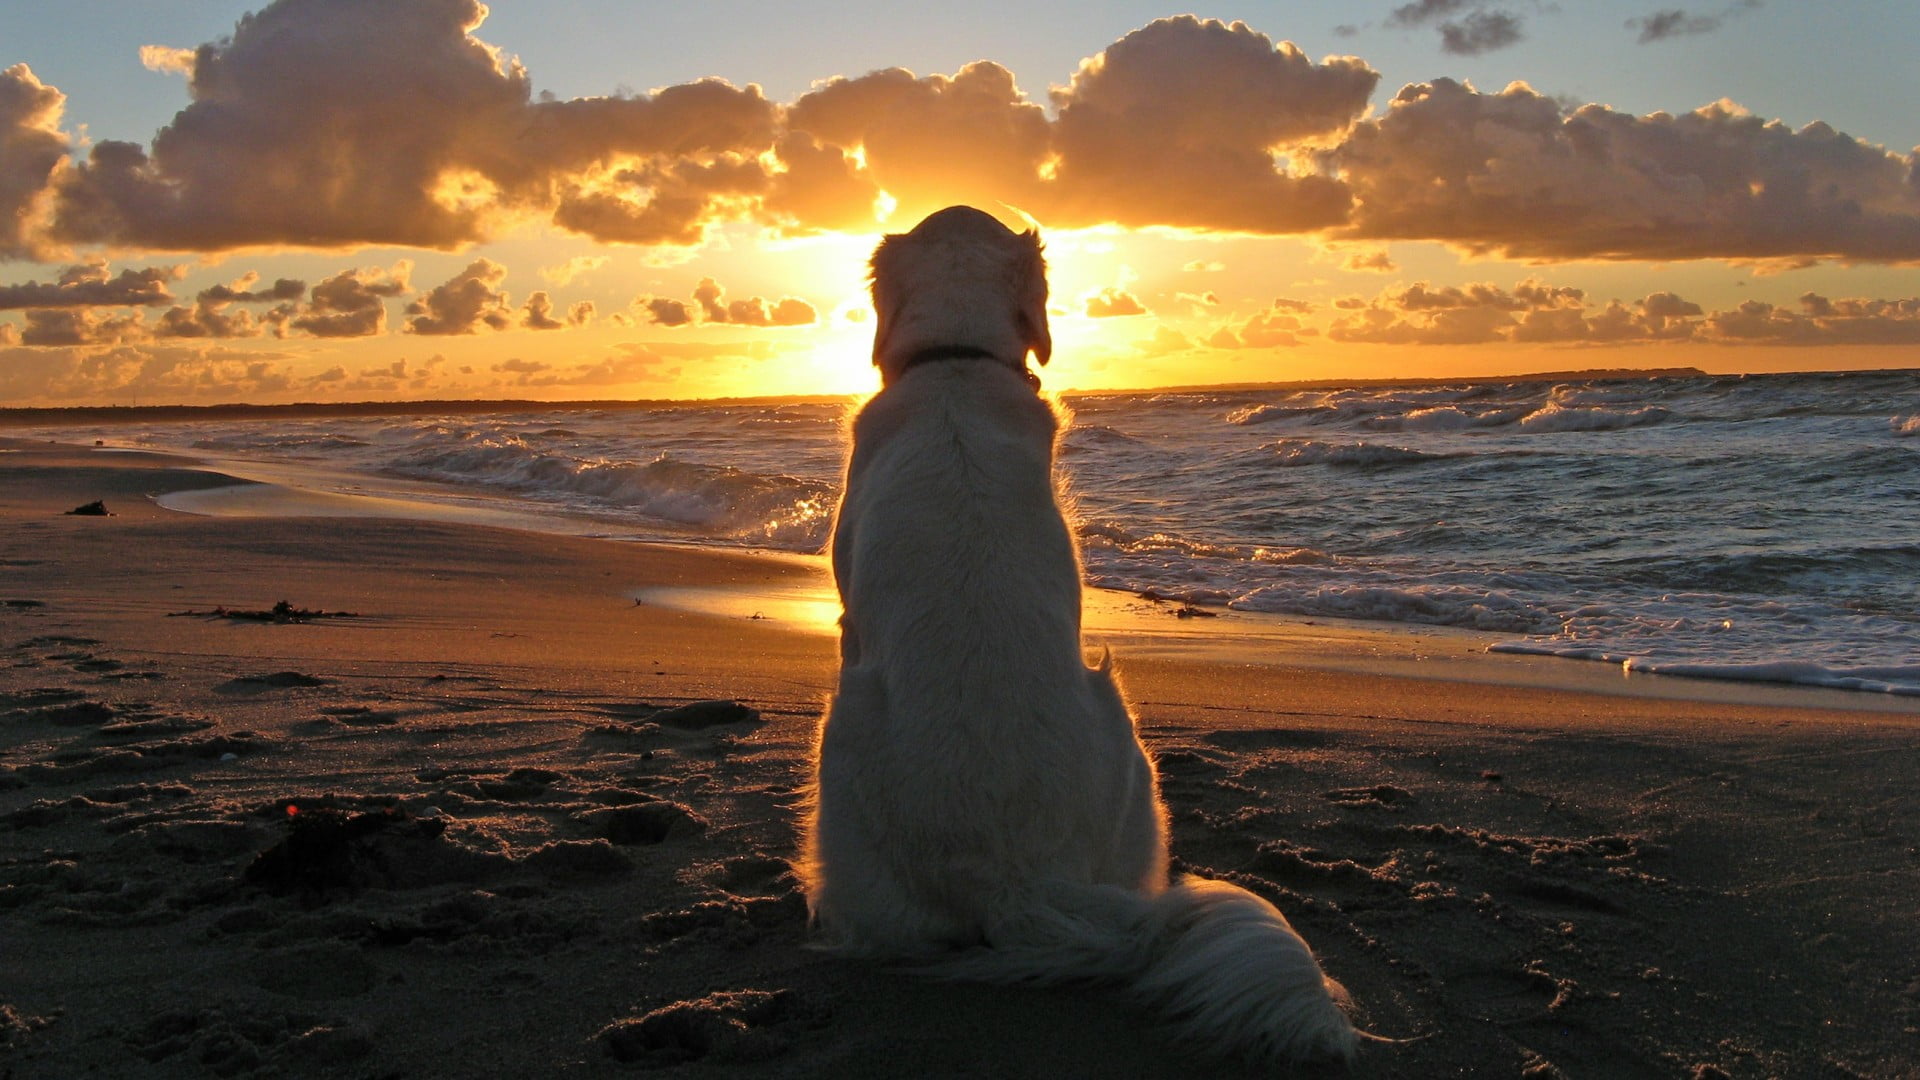 adult yellow Labrador retriever dog, dog, sunset, beach, waves